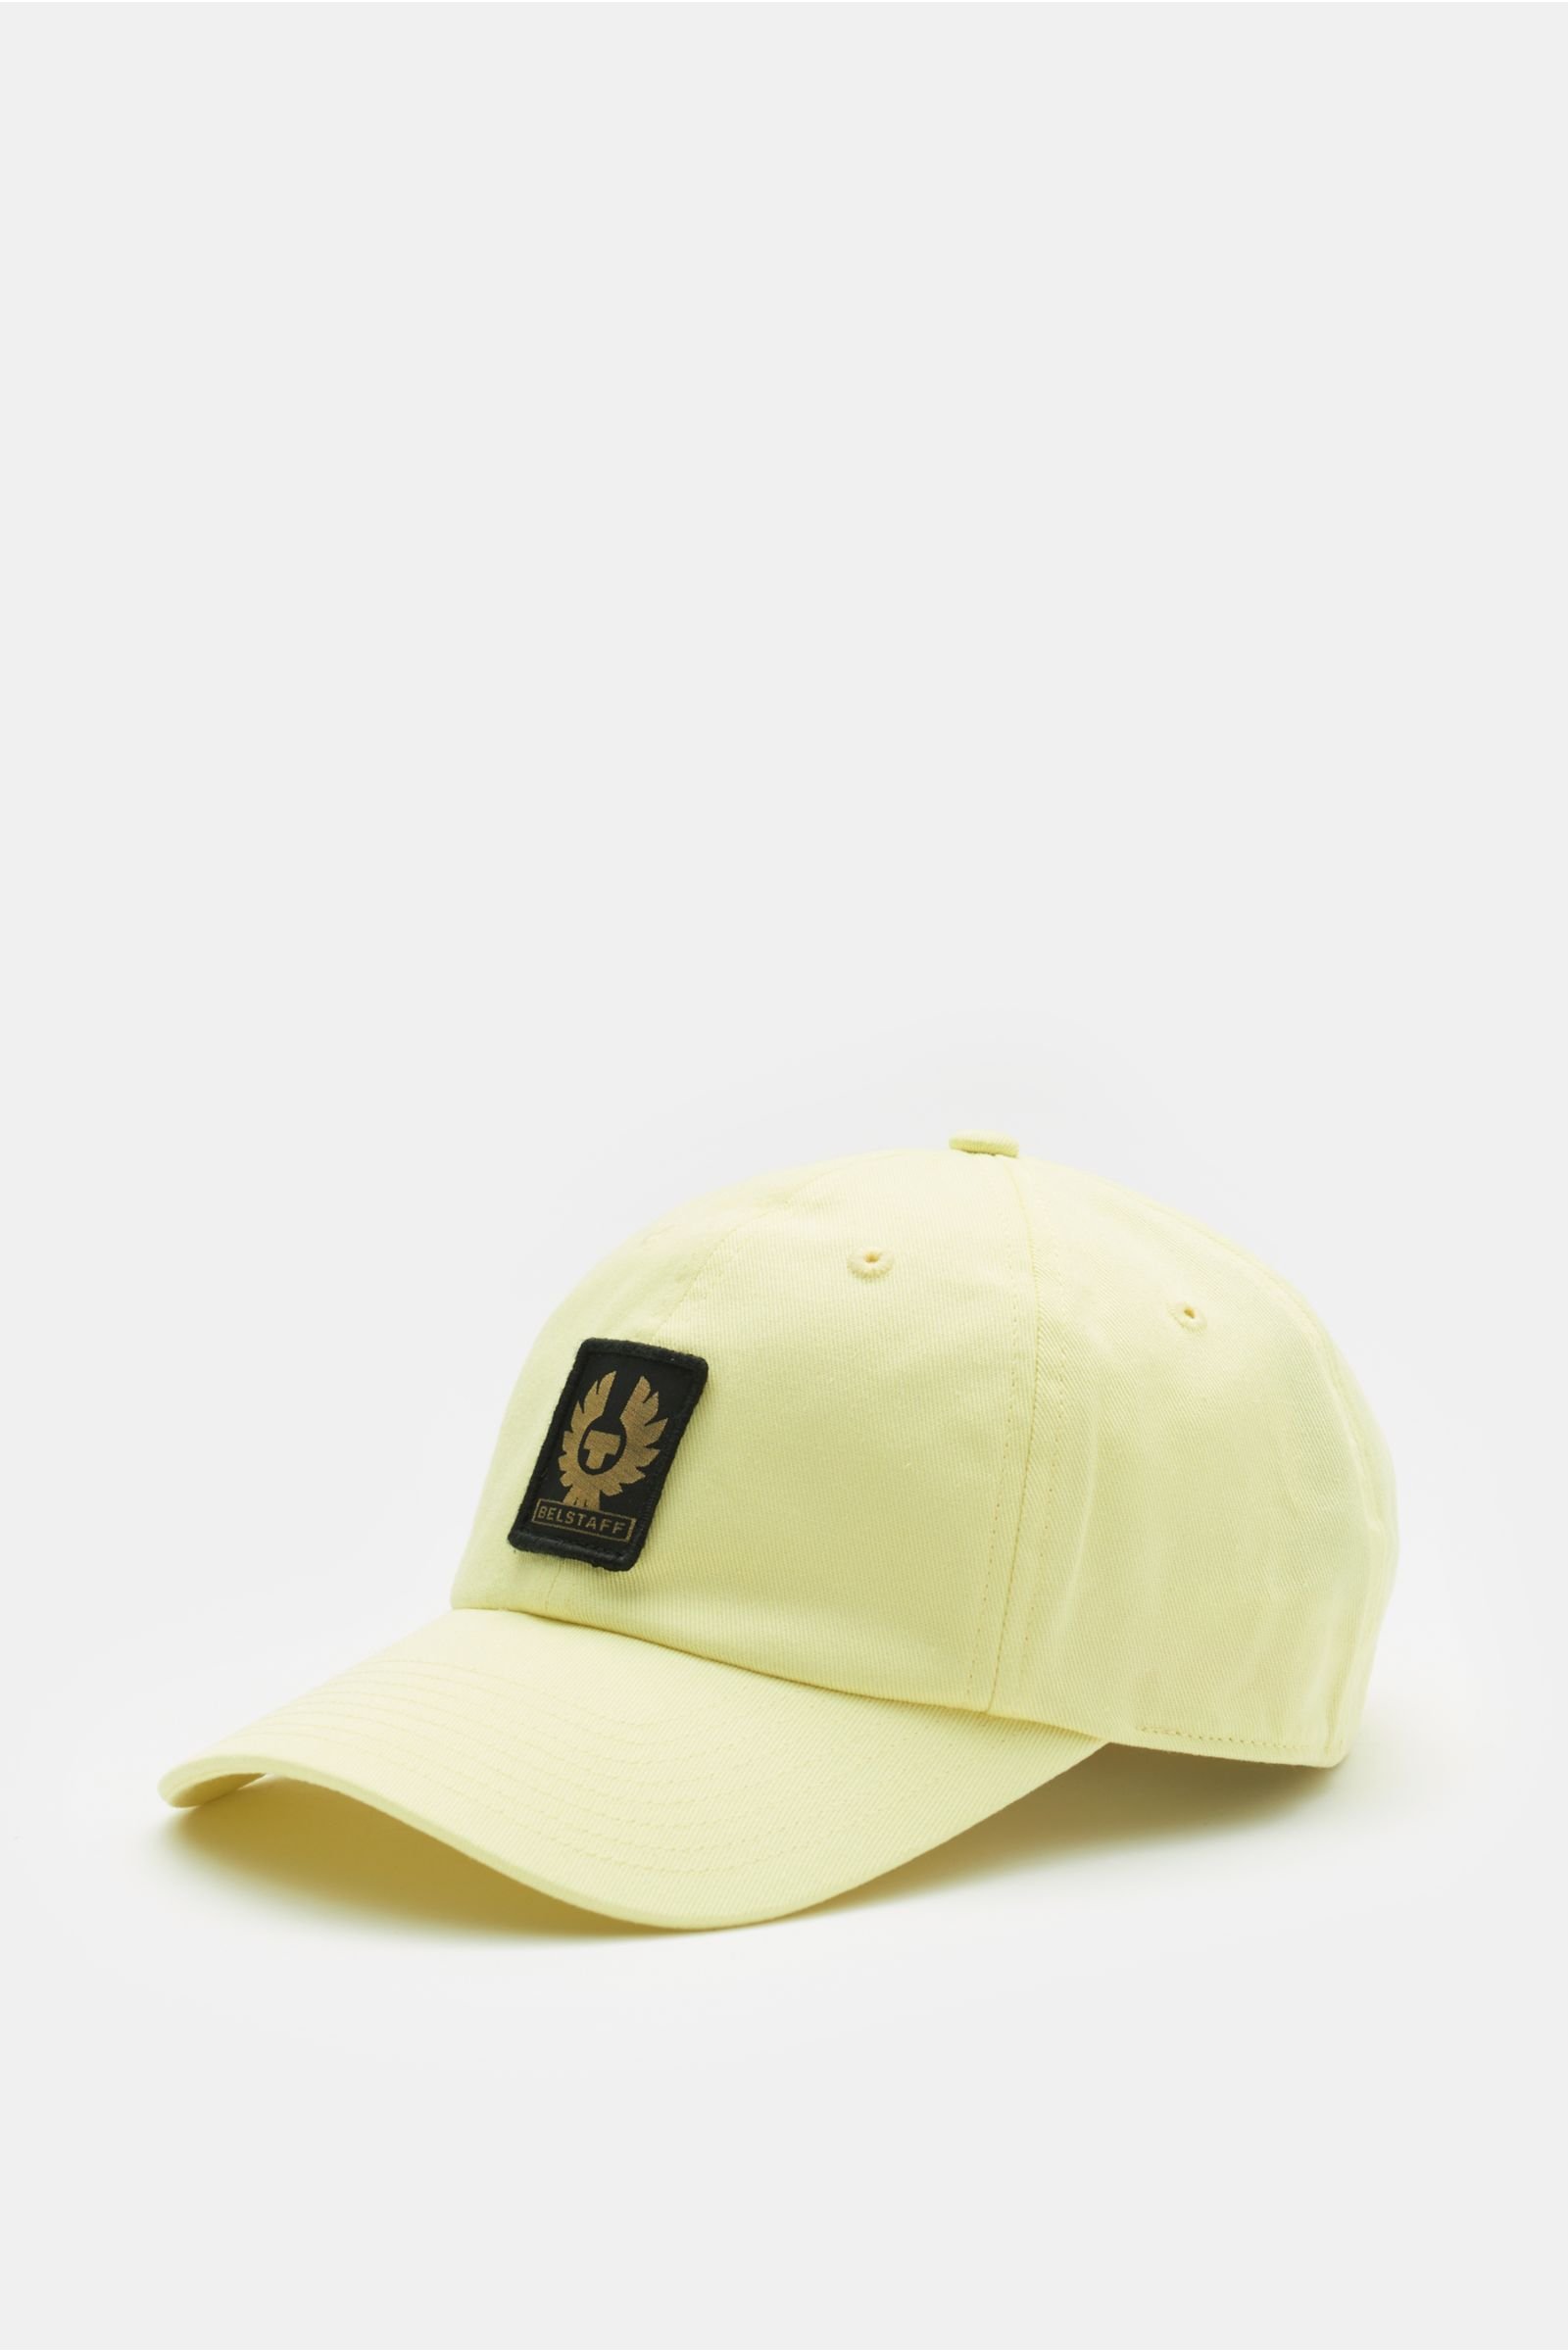 Baseball cap light yellow